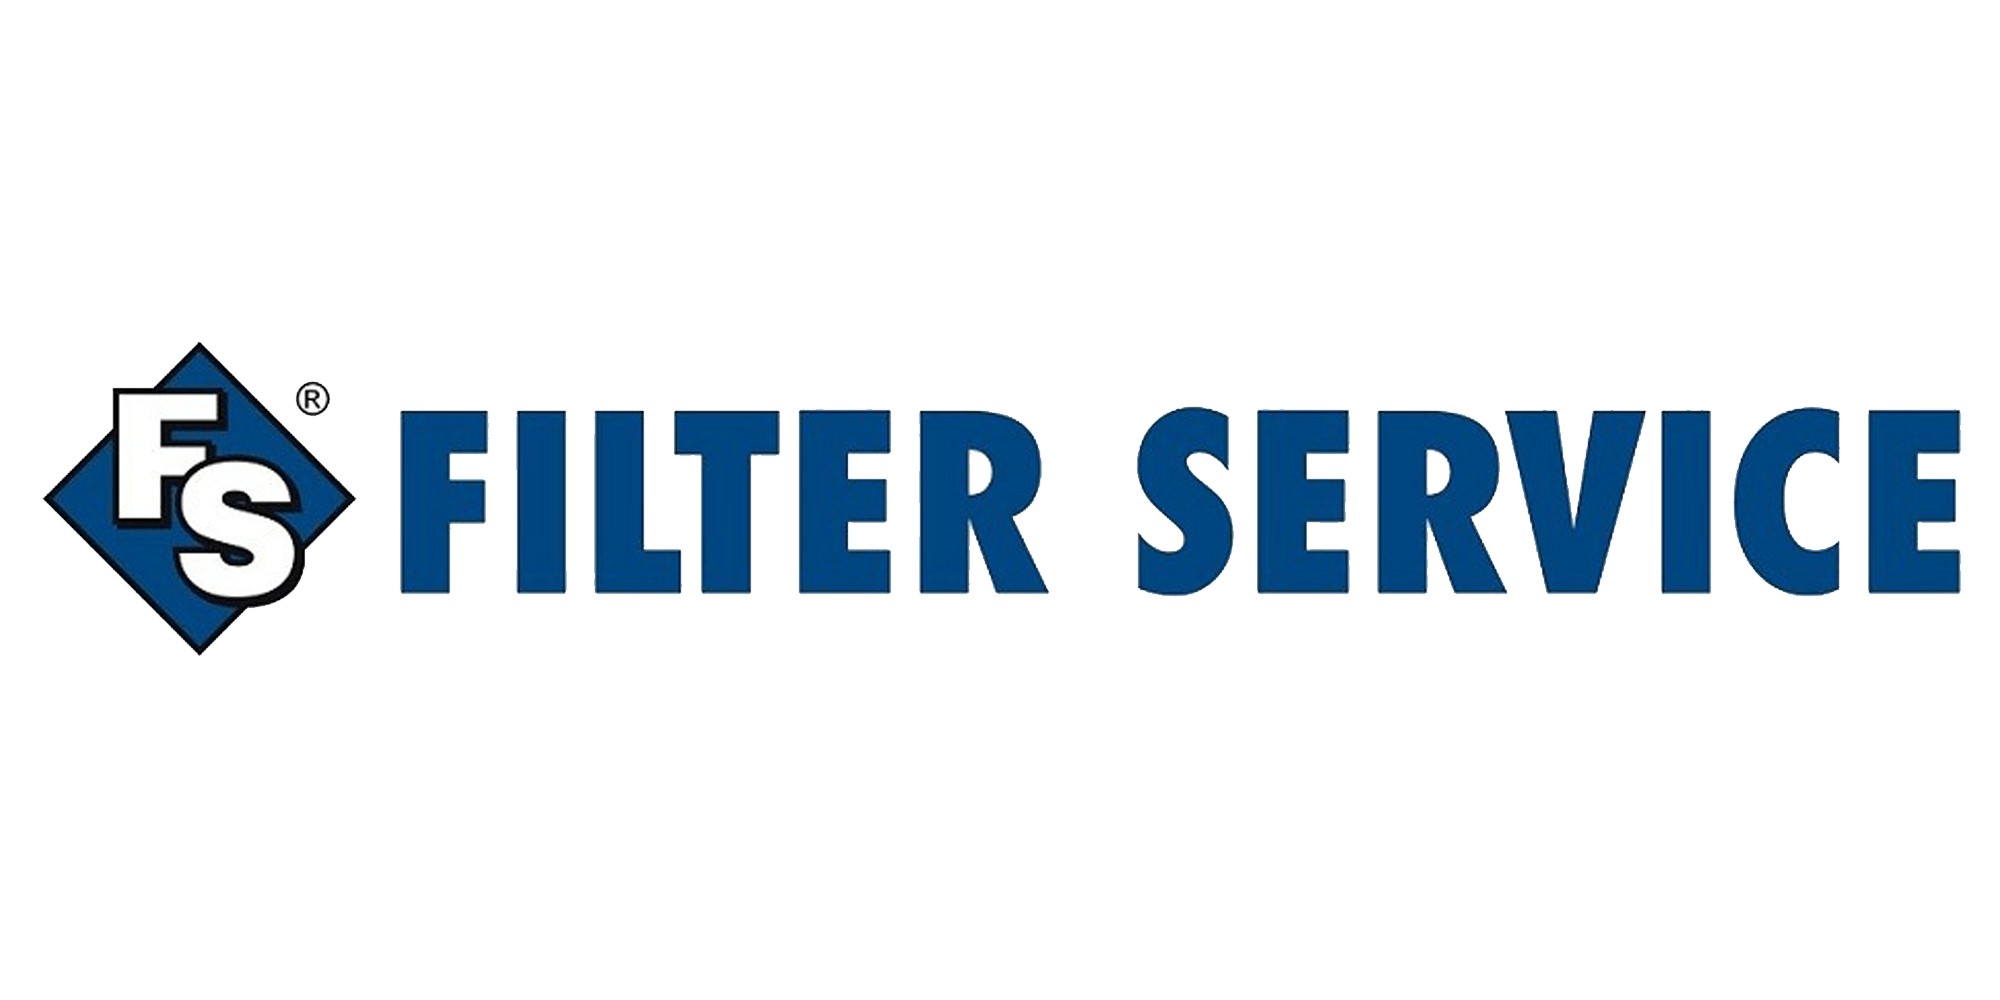 Filter service